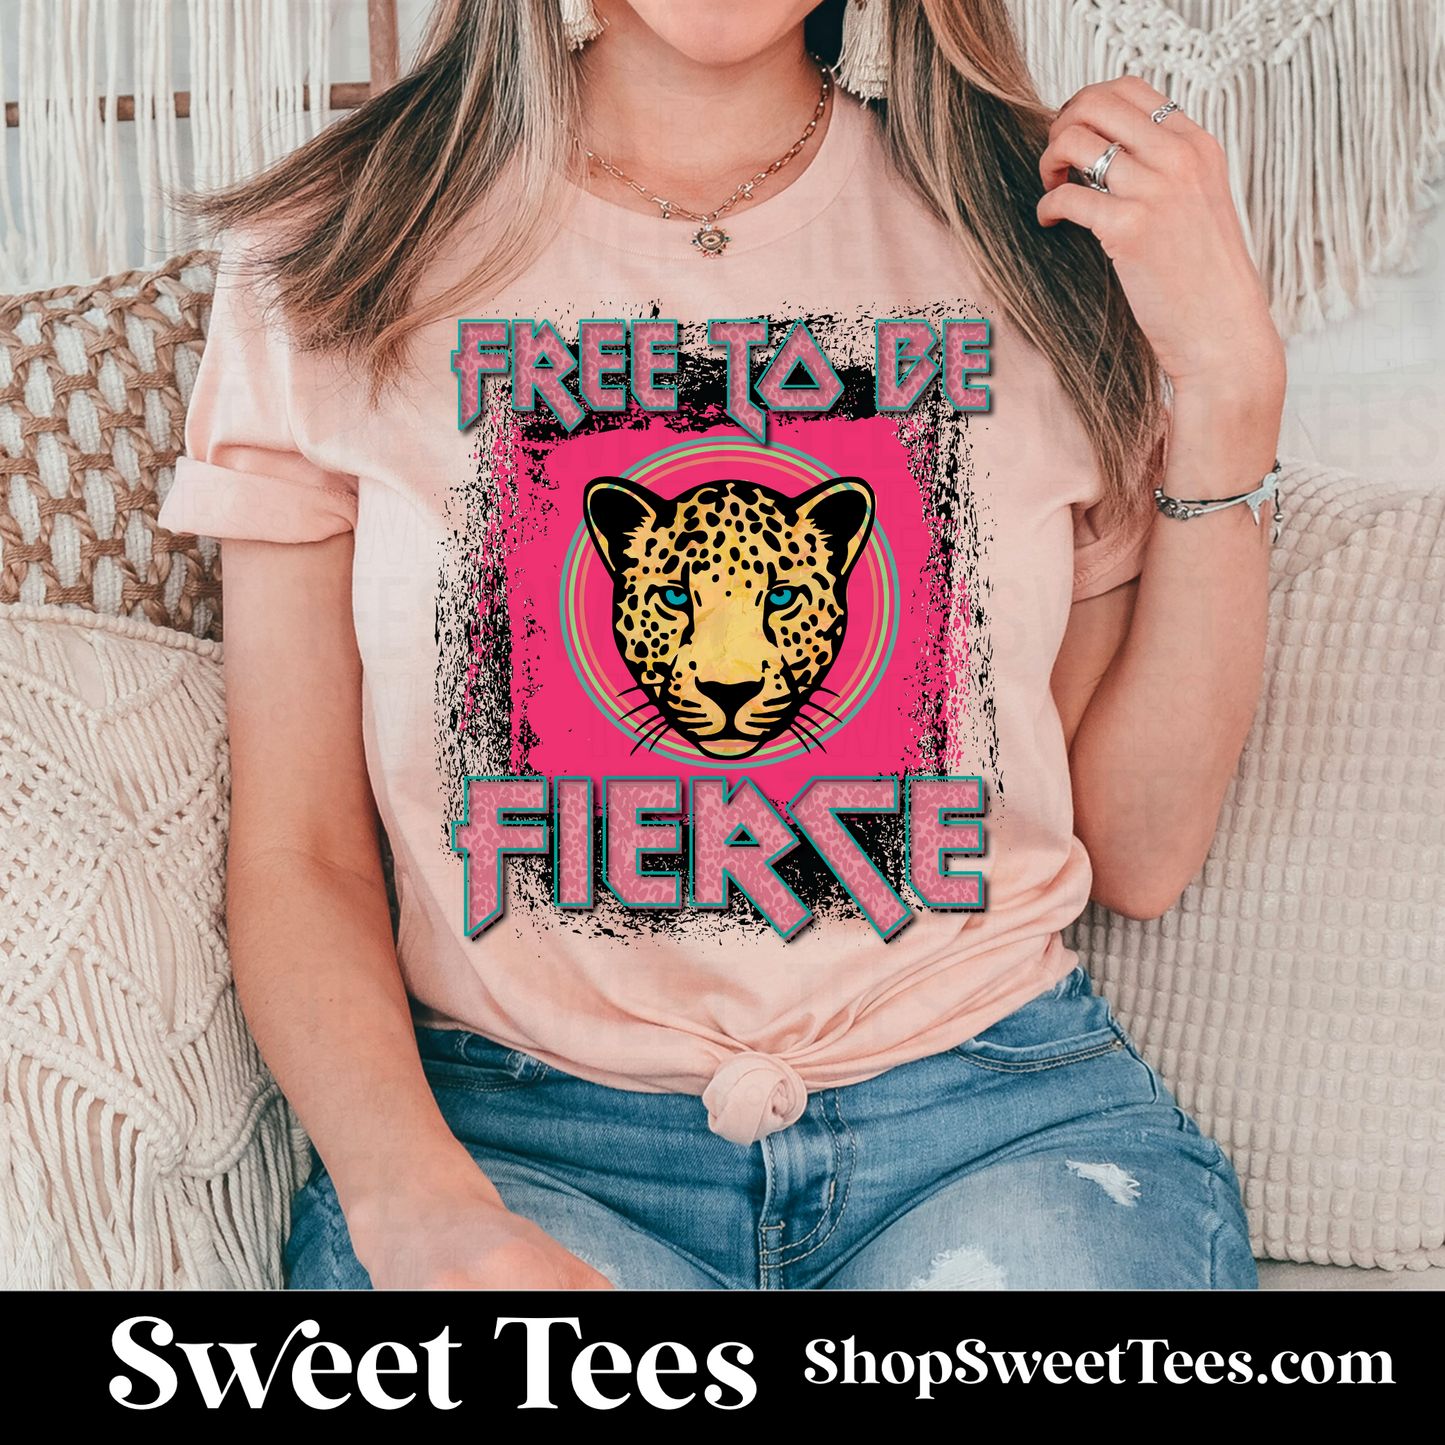 Free to be Fierce tee